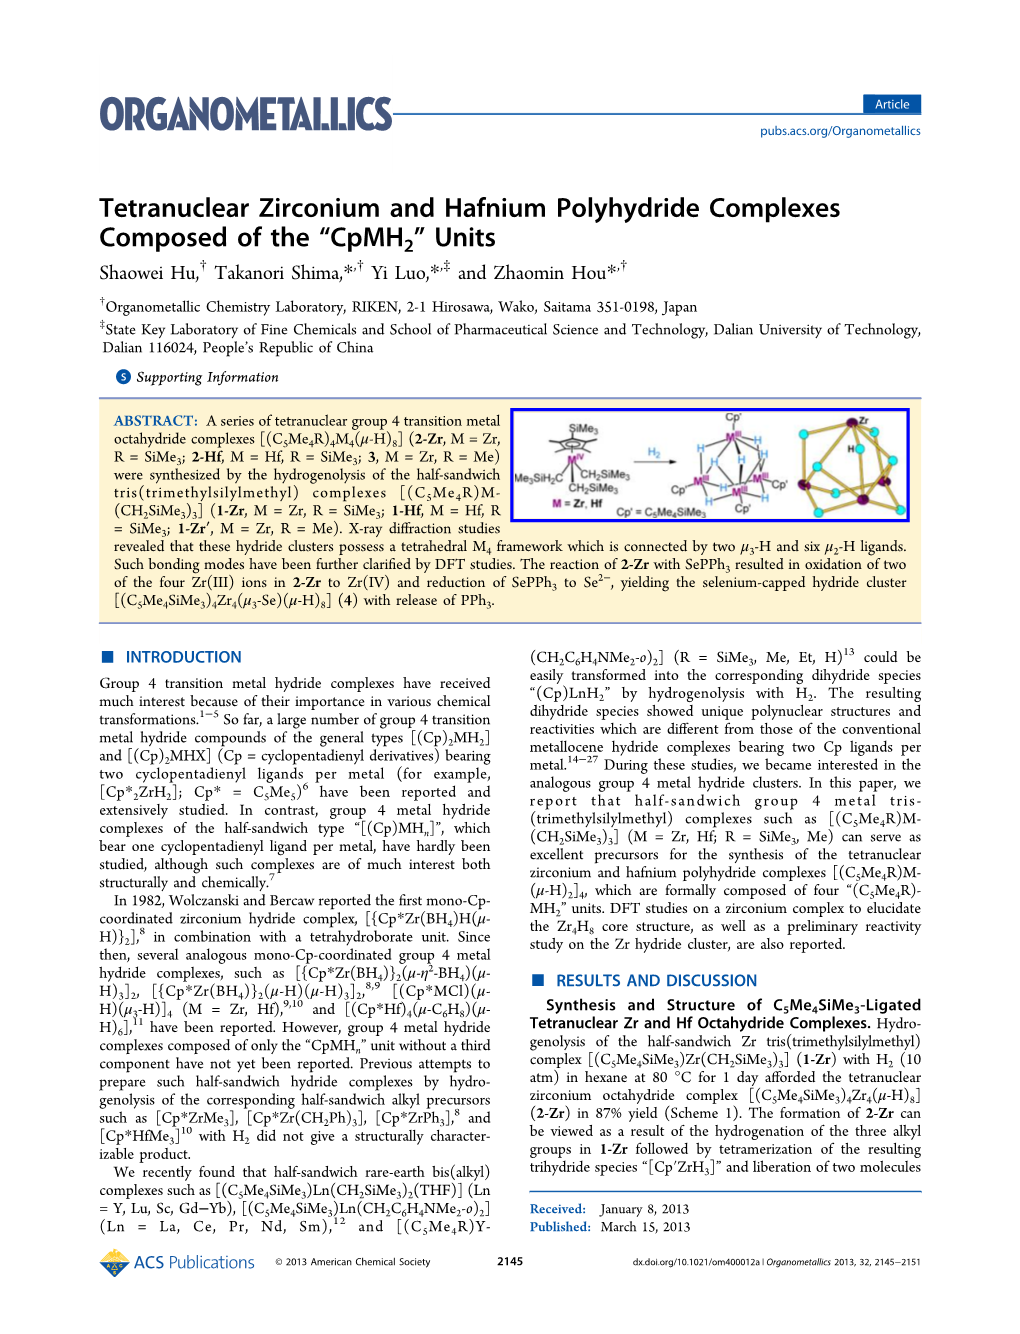 Tetranuclear Zirconium and Hafnium Polyhydride Complexes Composed of the Cpmh&lt;Sub&gt;2&lt;/Sub&gt; Units